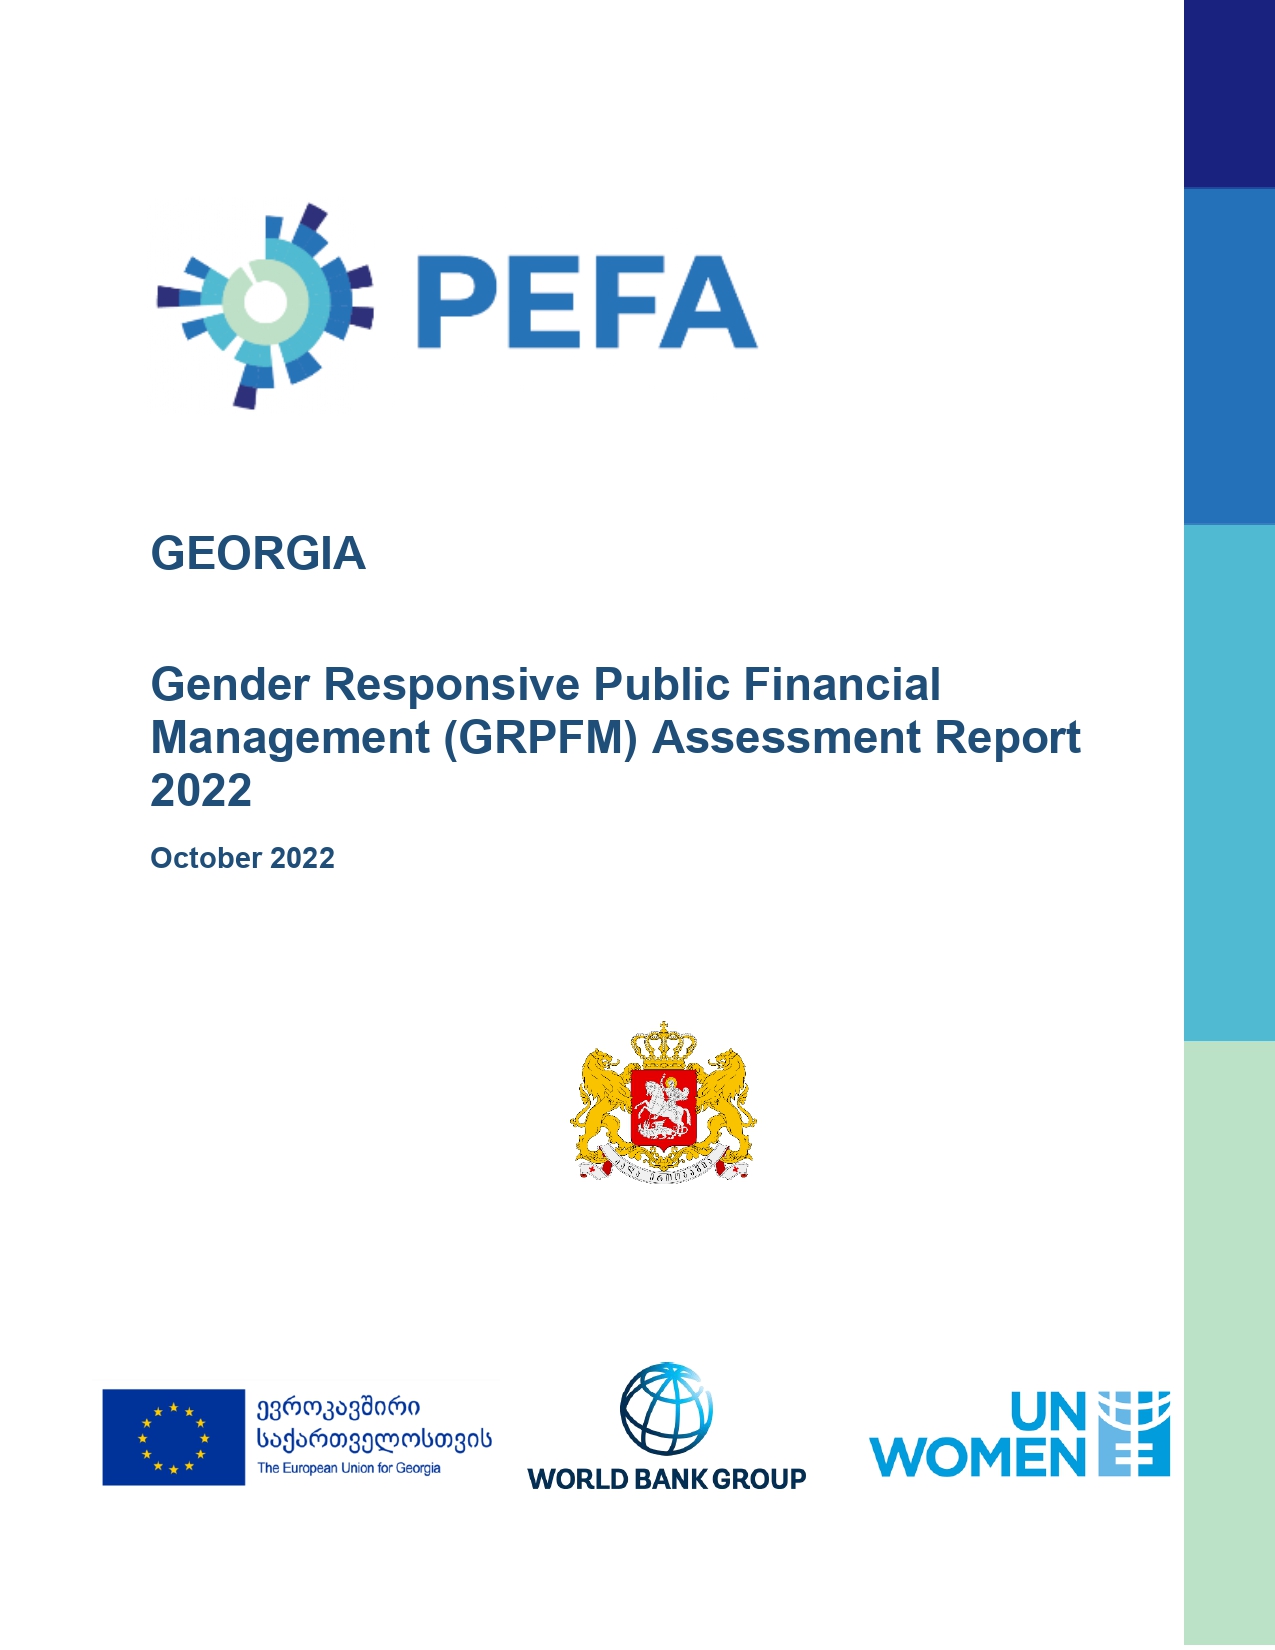  Gender Responsive Public Financial Management (GRPFM) Assessment Report - cover